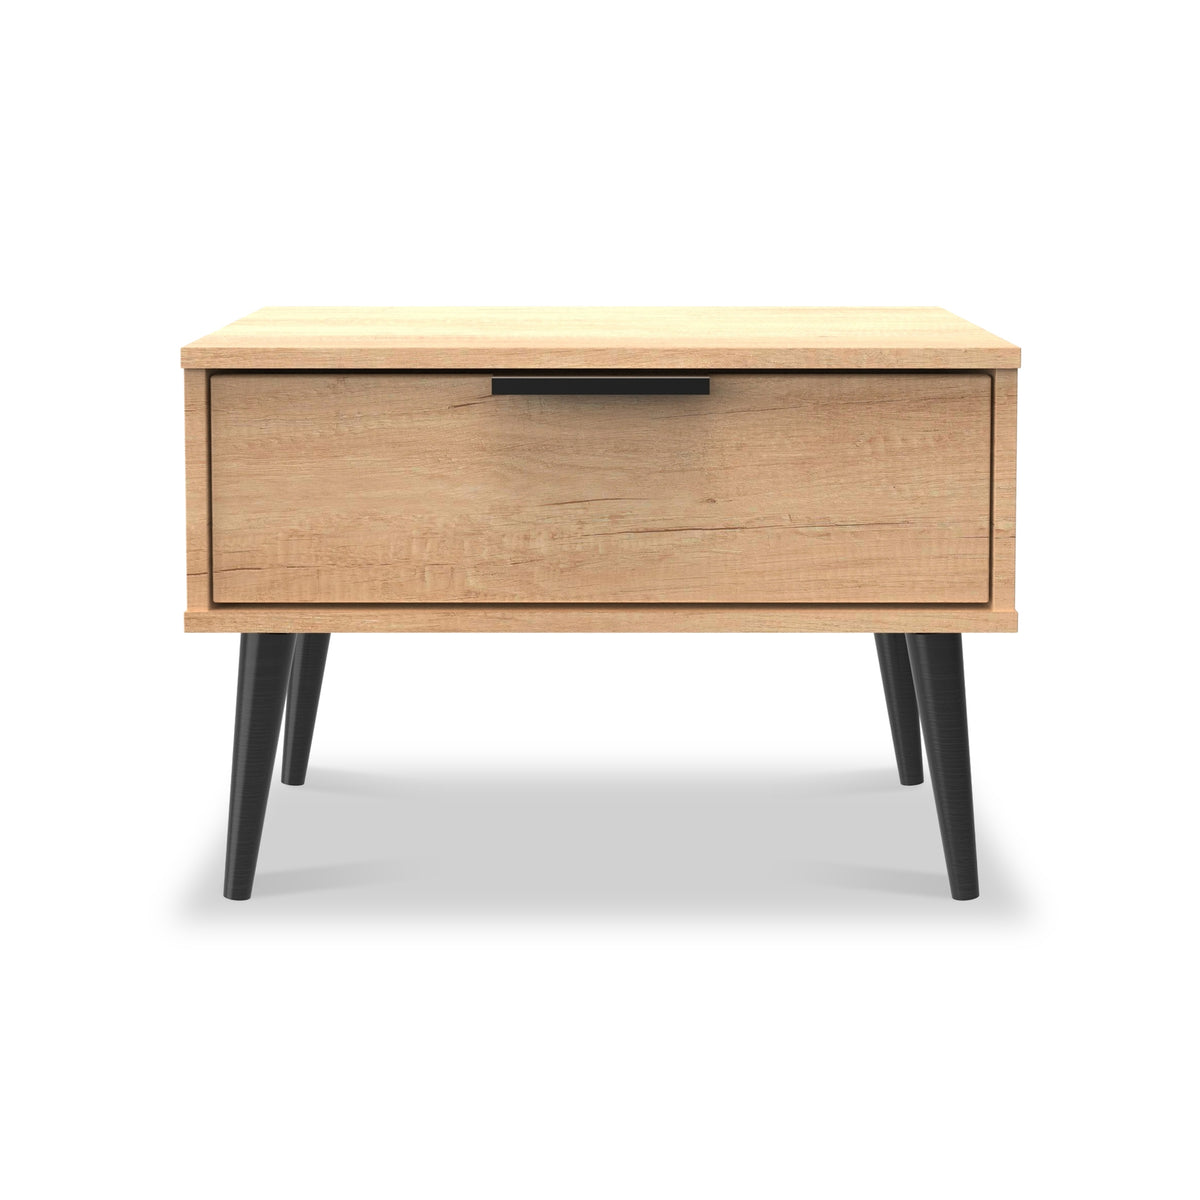 Asher Light Oak 1 Drawer Side Table from Roseland Furniture